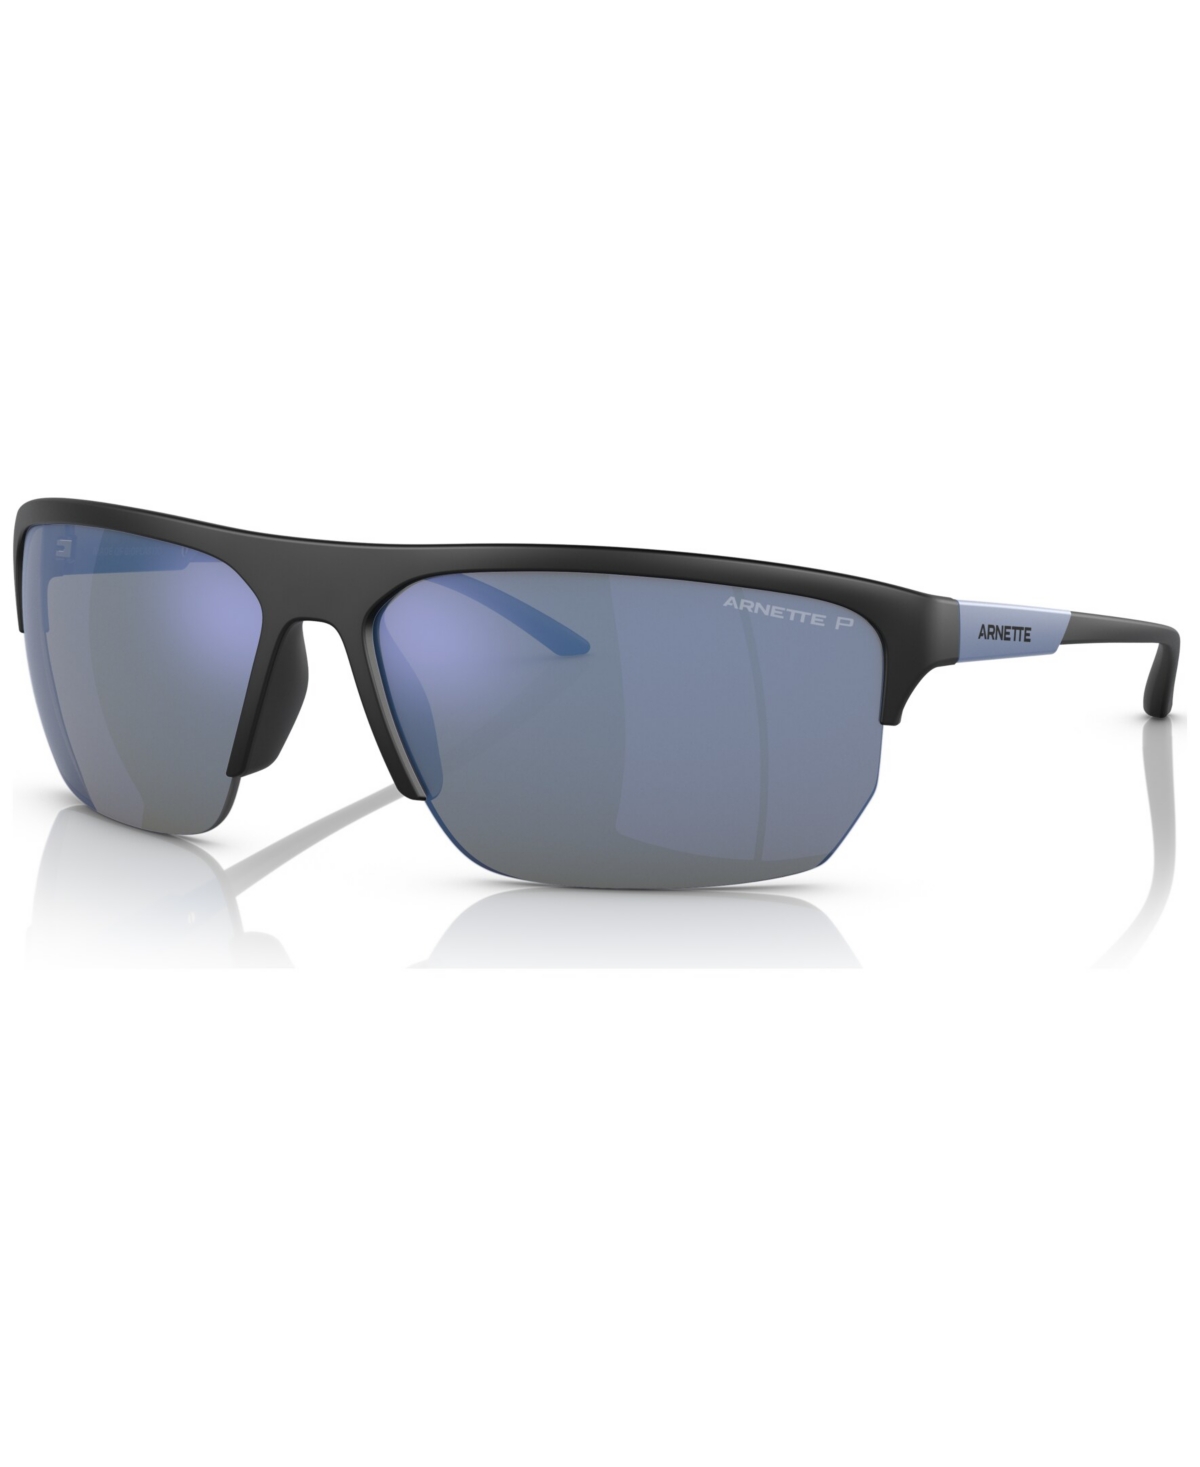 Unisex Polarized Sunglasses, AN430868-zp - Matte Black